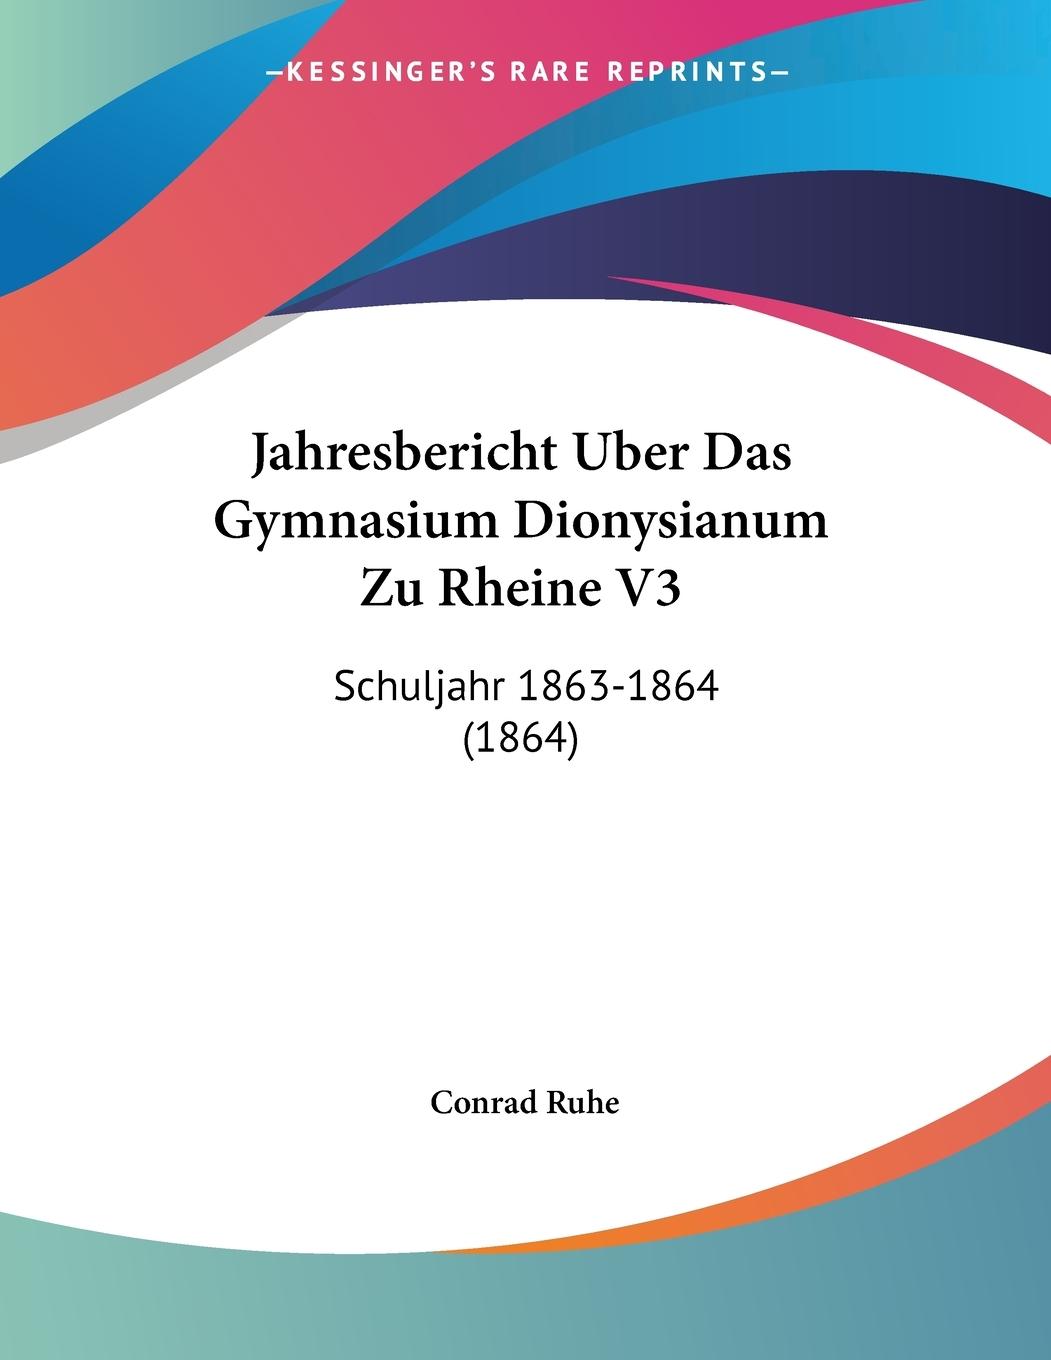 Jahresbericht Uber Das Gymnasium Dionysianum Zu Rheine V3 - Ruhe, Conrad